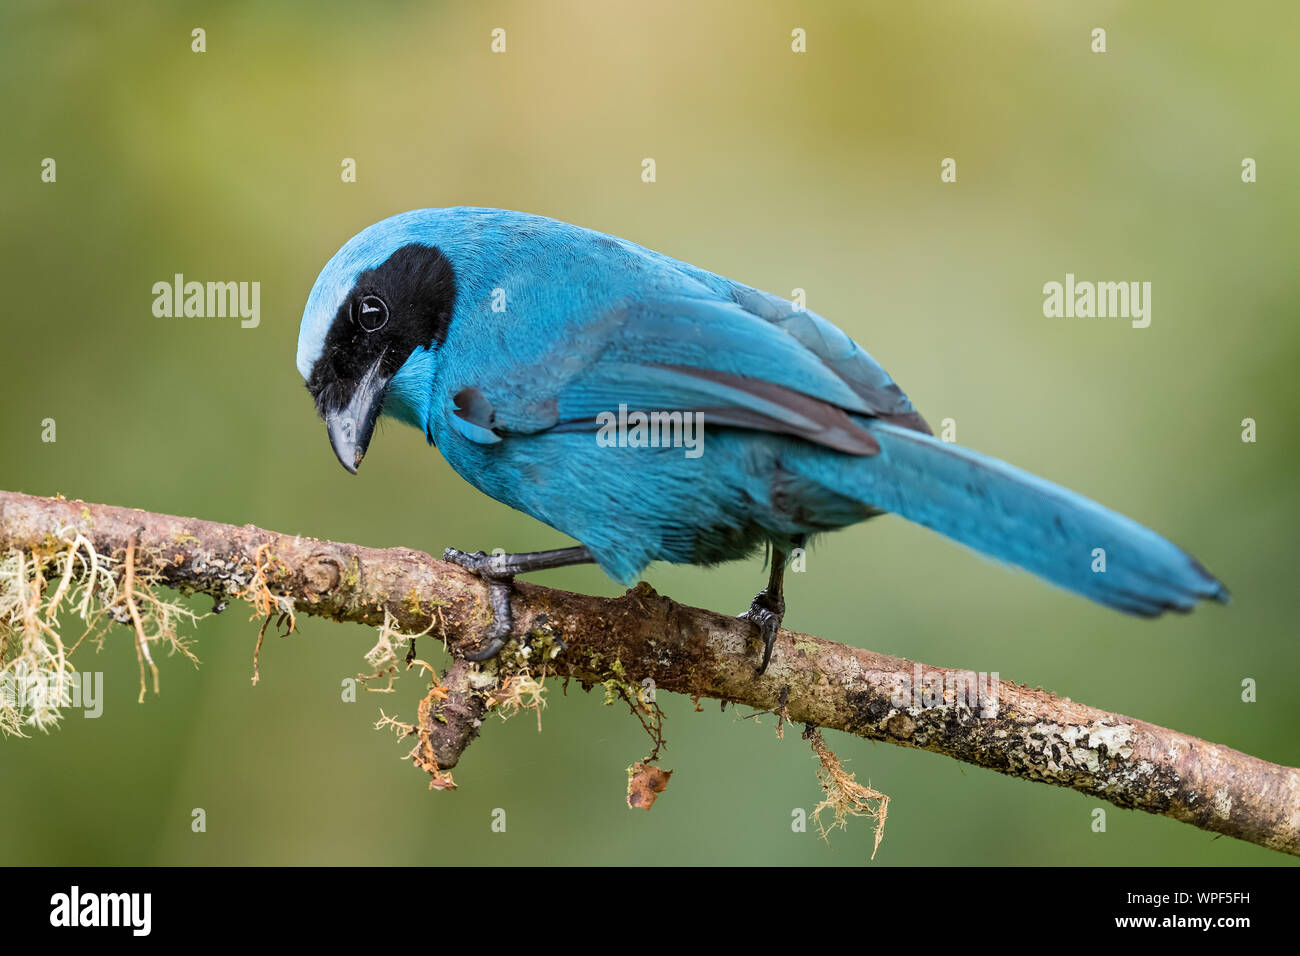 Turquoise Jay - Cyanolyca turcosa, beautiful blue jay from Andean slopes, Guango Lodge, Ecuador. Stock Photo